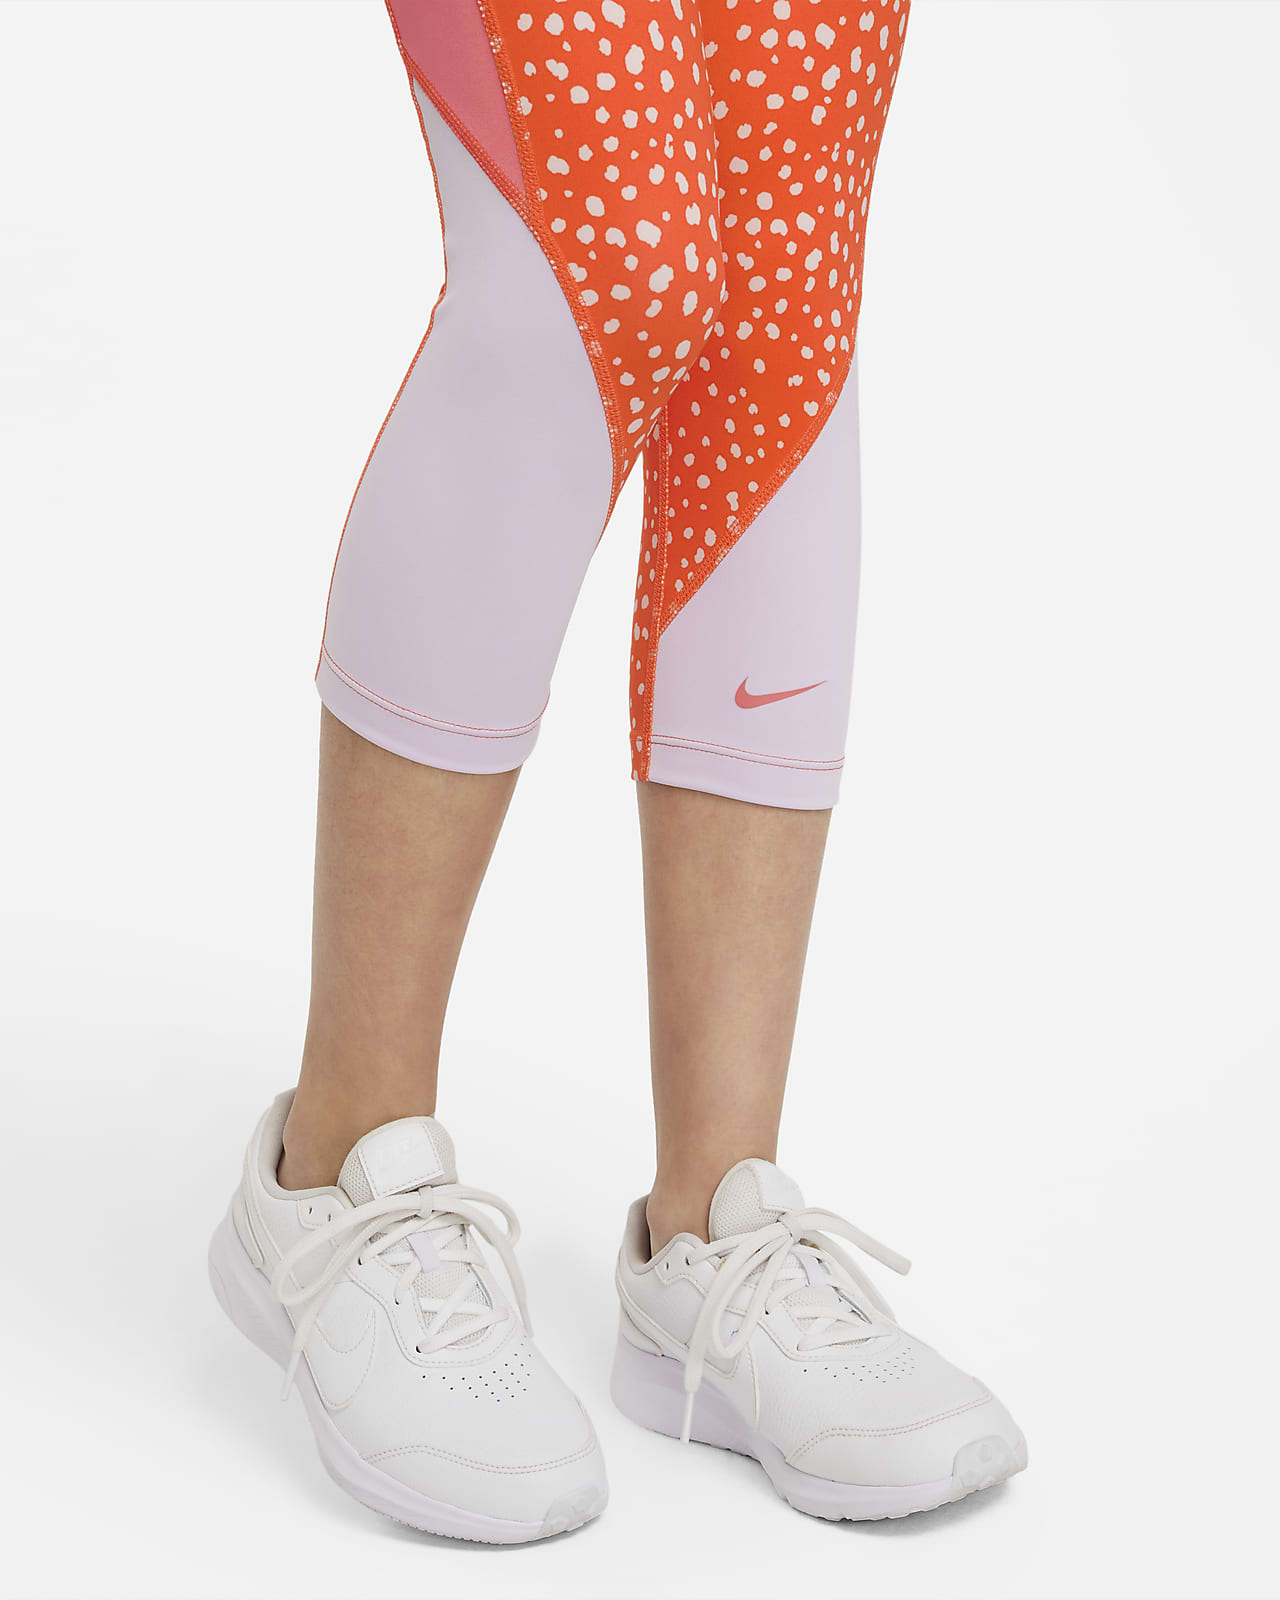 Nike Pro Cool Capri Legging - Girls